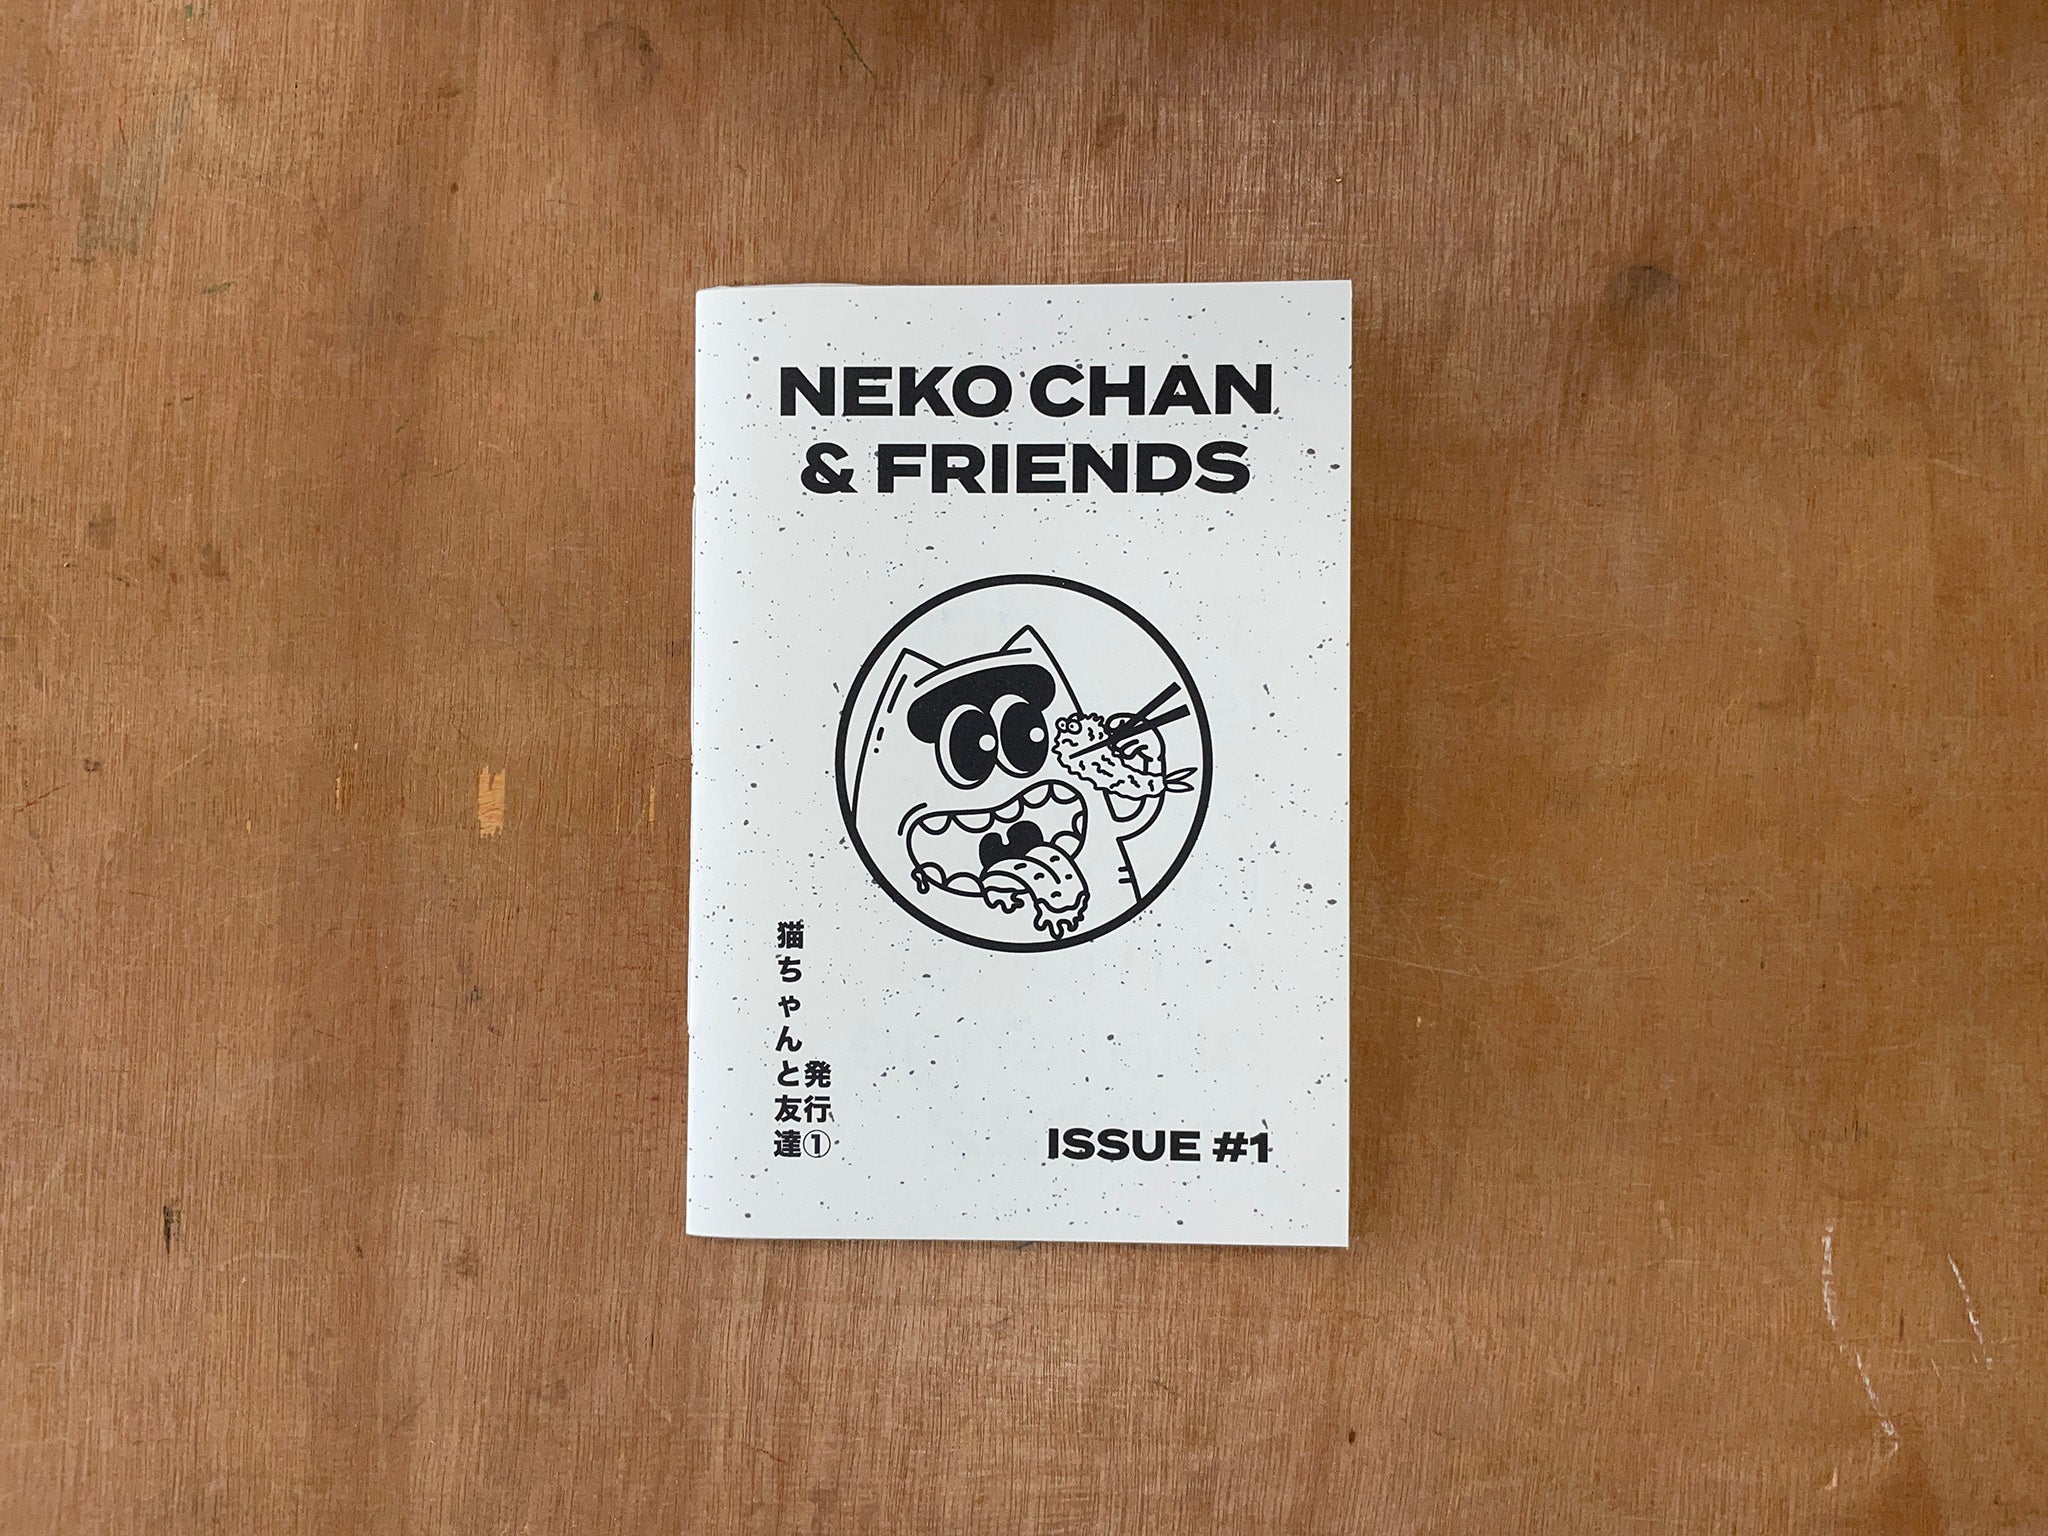 NEKO CHAN & FRIENDS ISSUE #1 by Hannah Killoh